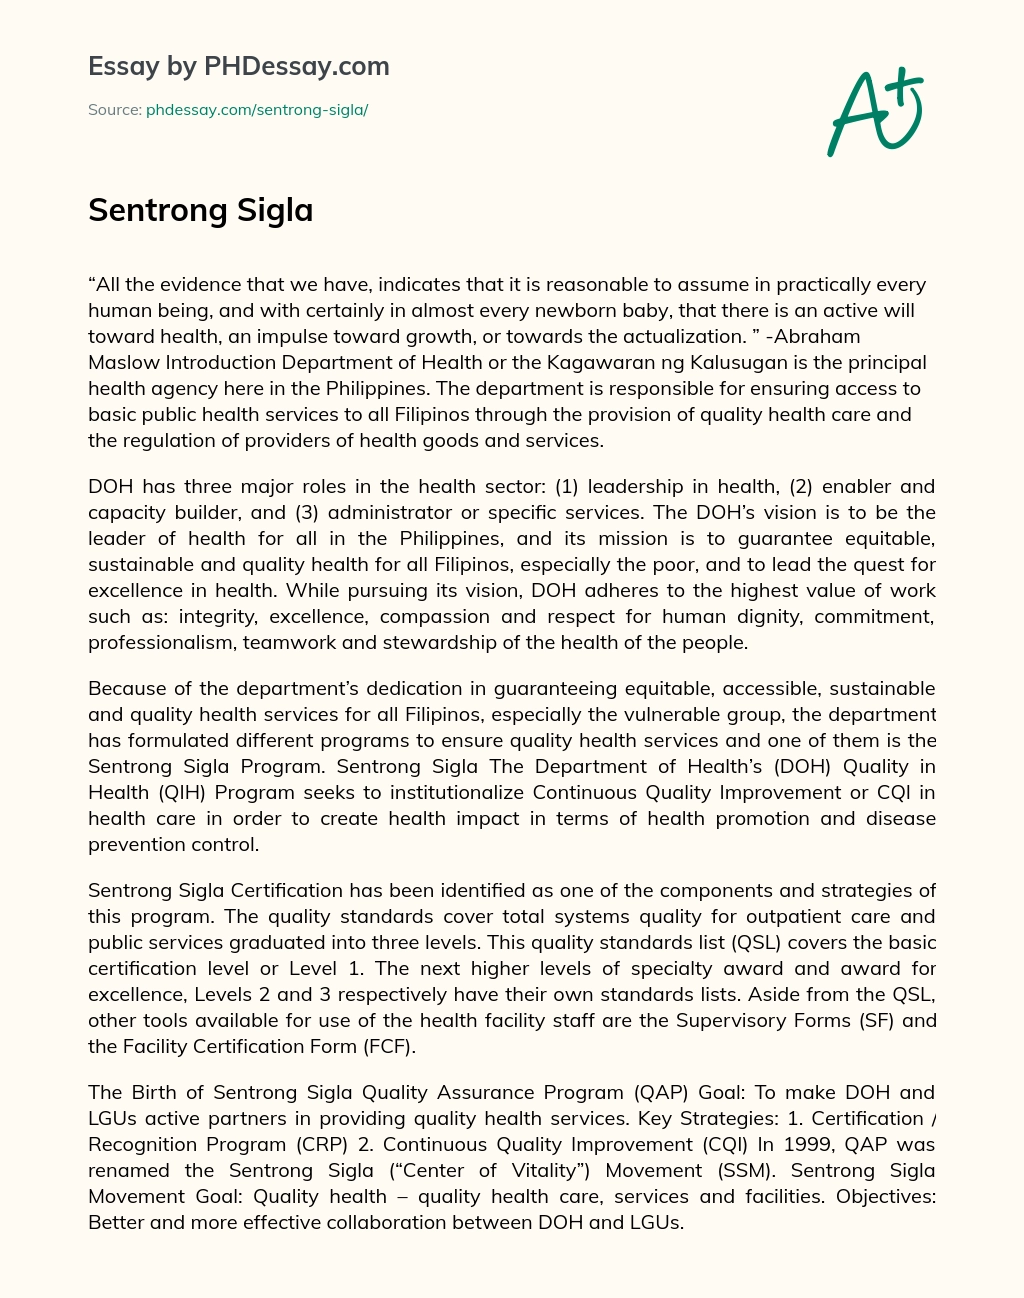 Sentrong Sigla essay